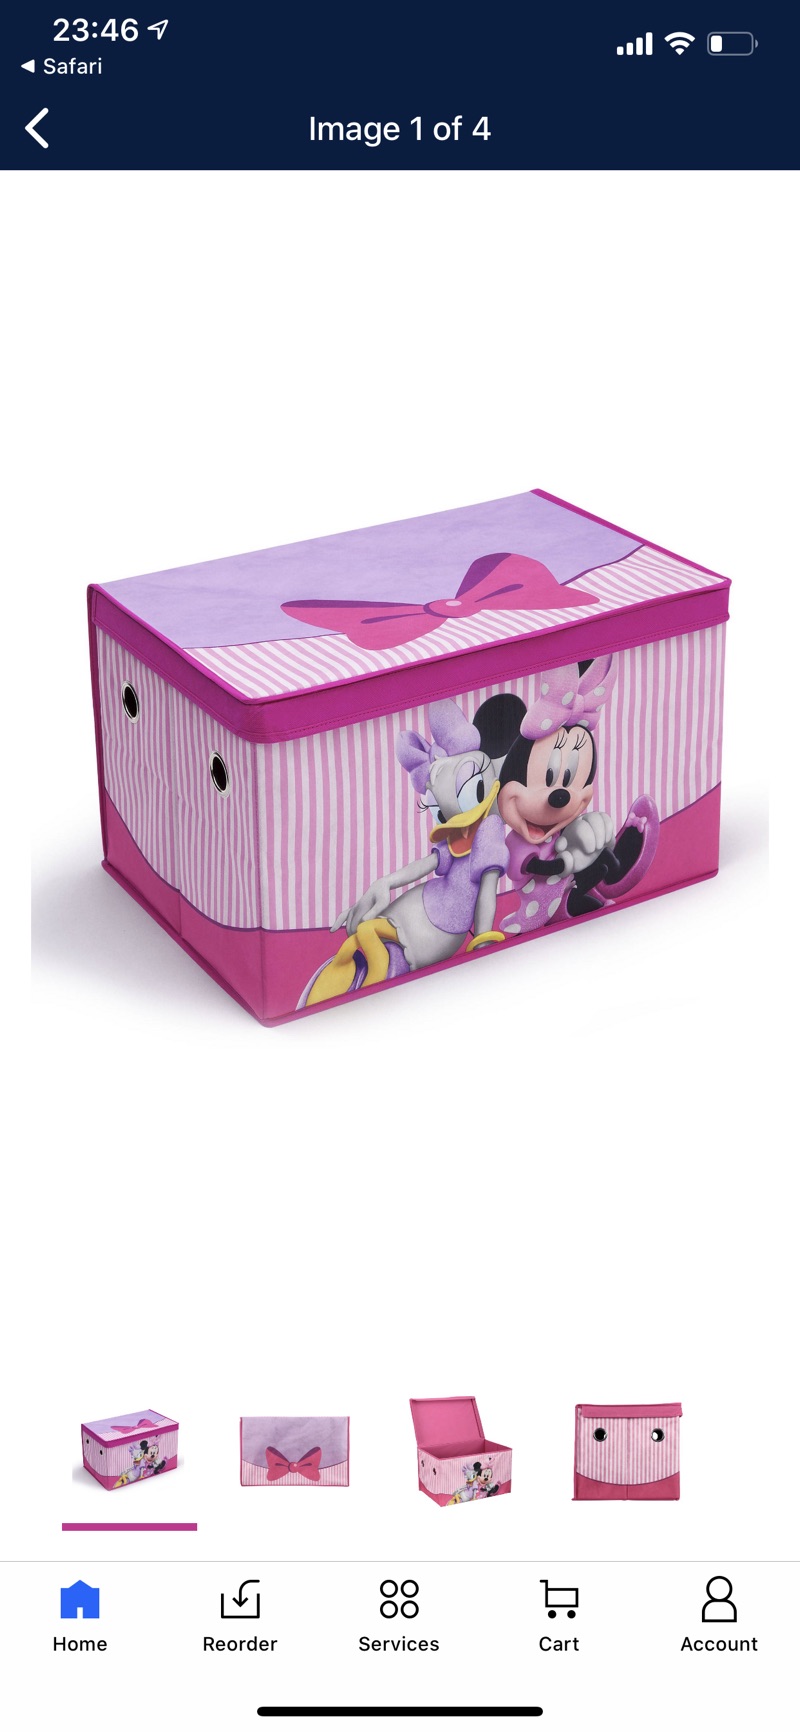 Disney Minnie Mouse Fabric Toy Box by Delta Children - Walmart.com

迪士尼儿童米妮布艺玩具盒